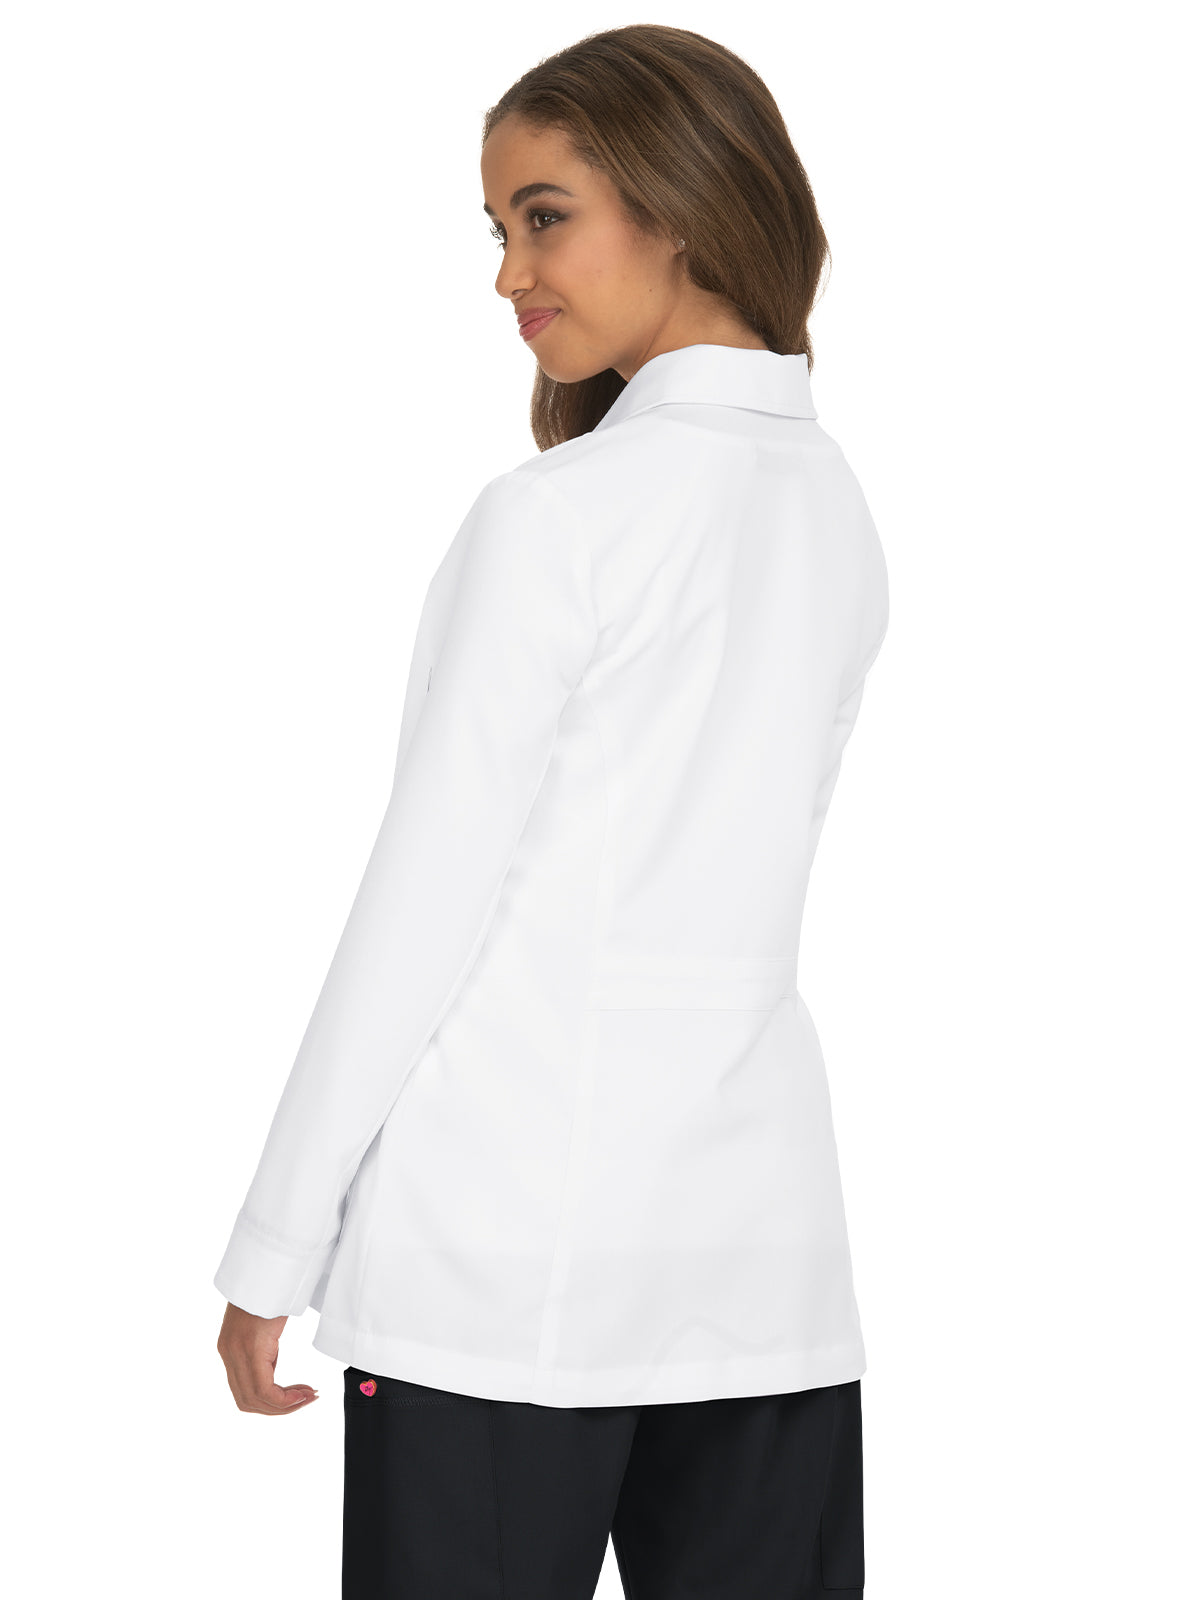 Women's 5-Pocket Lab Coat